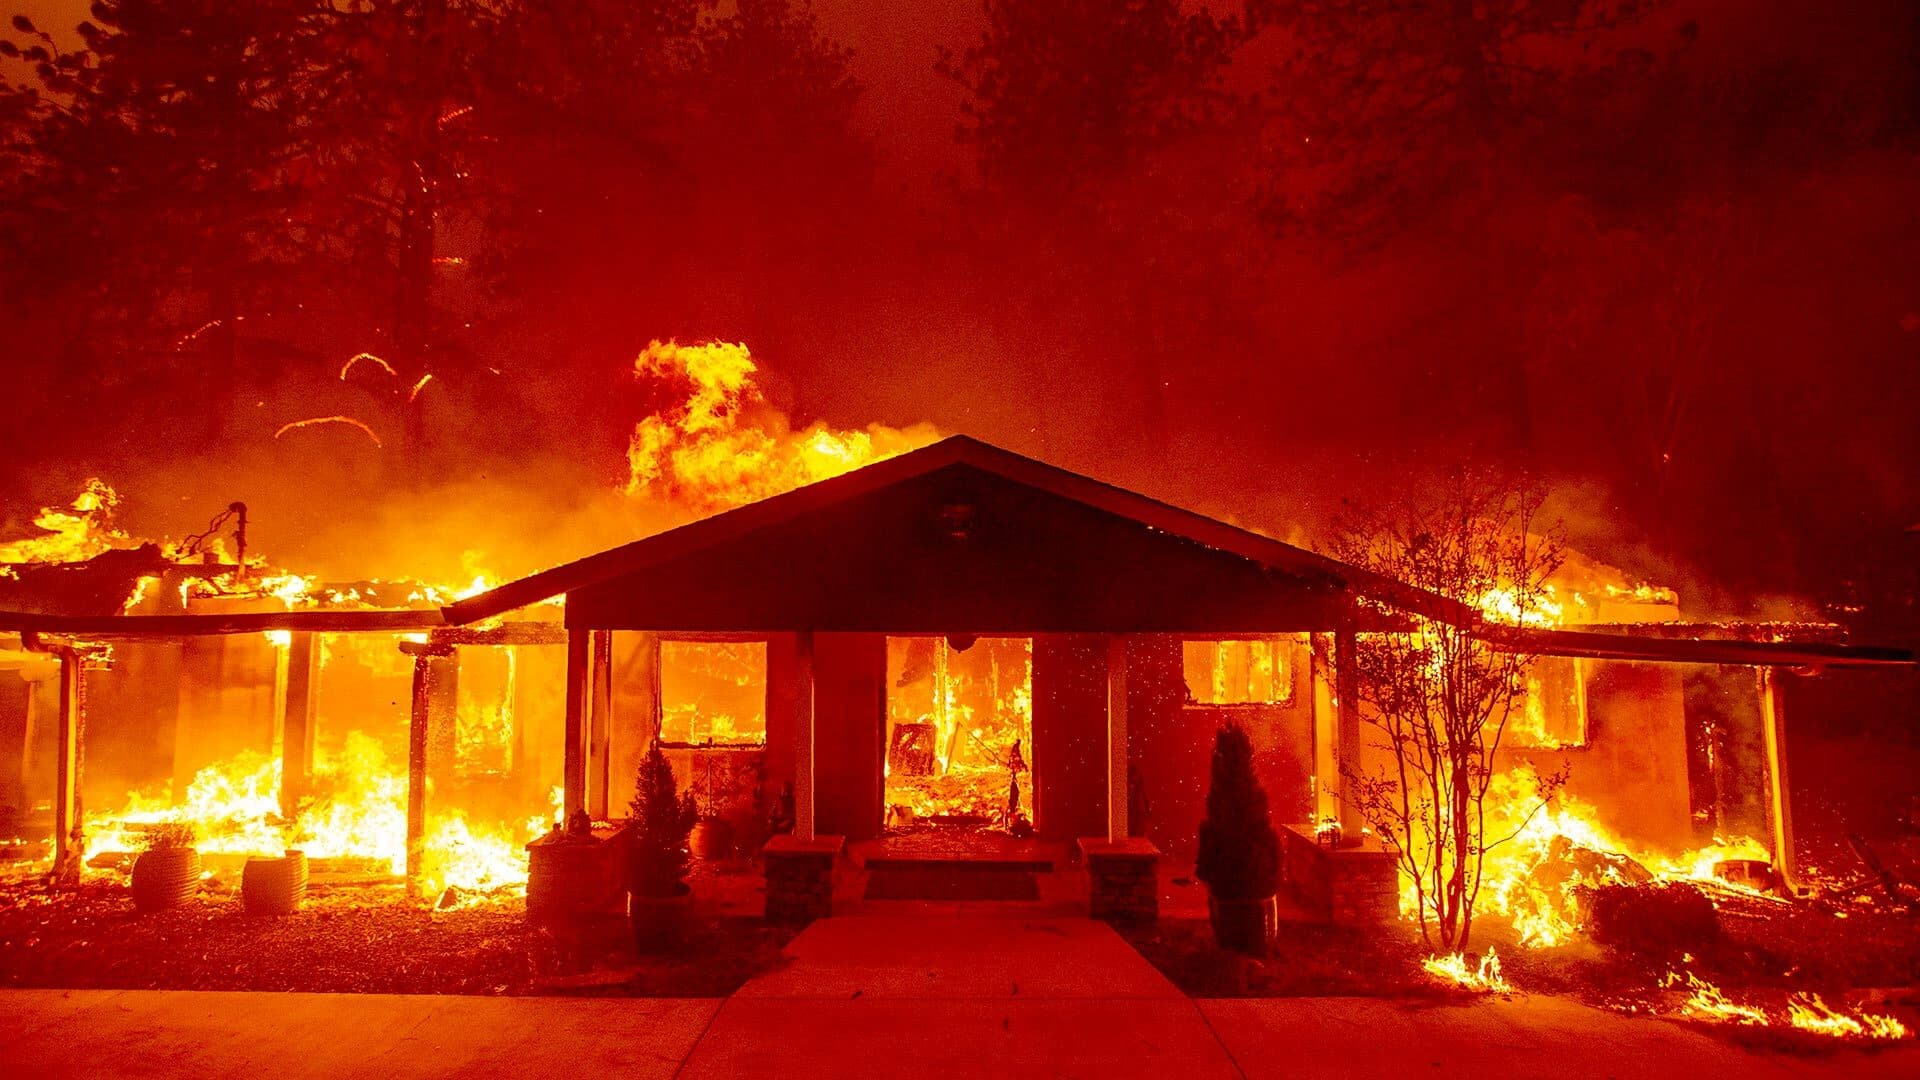 Camp wildfire in California